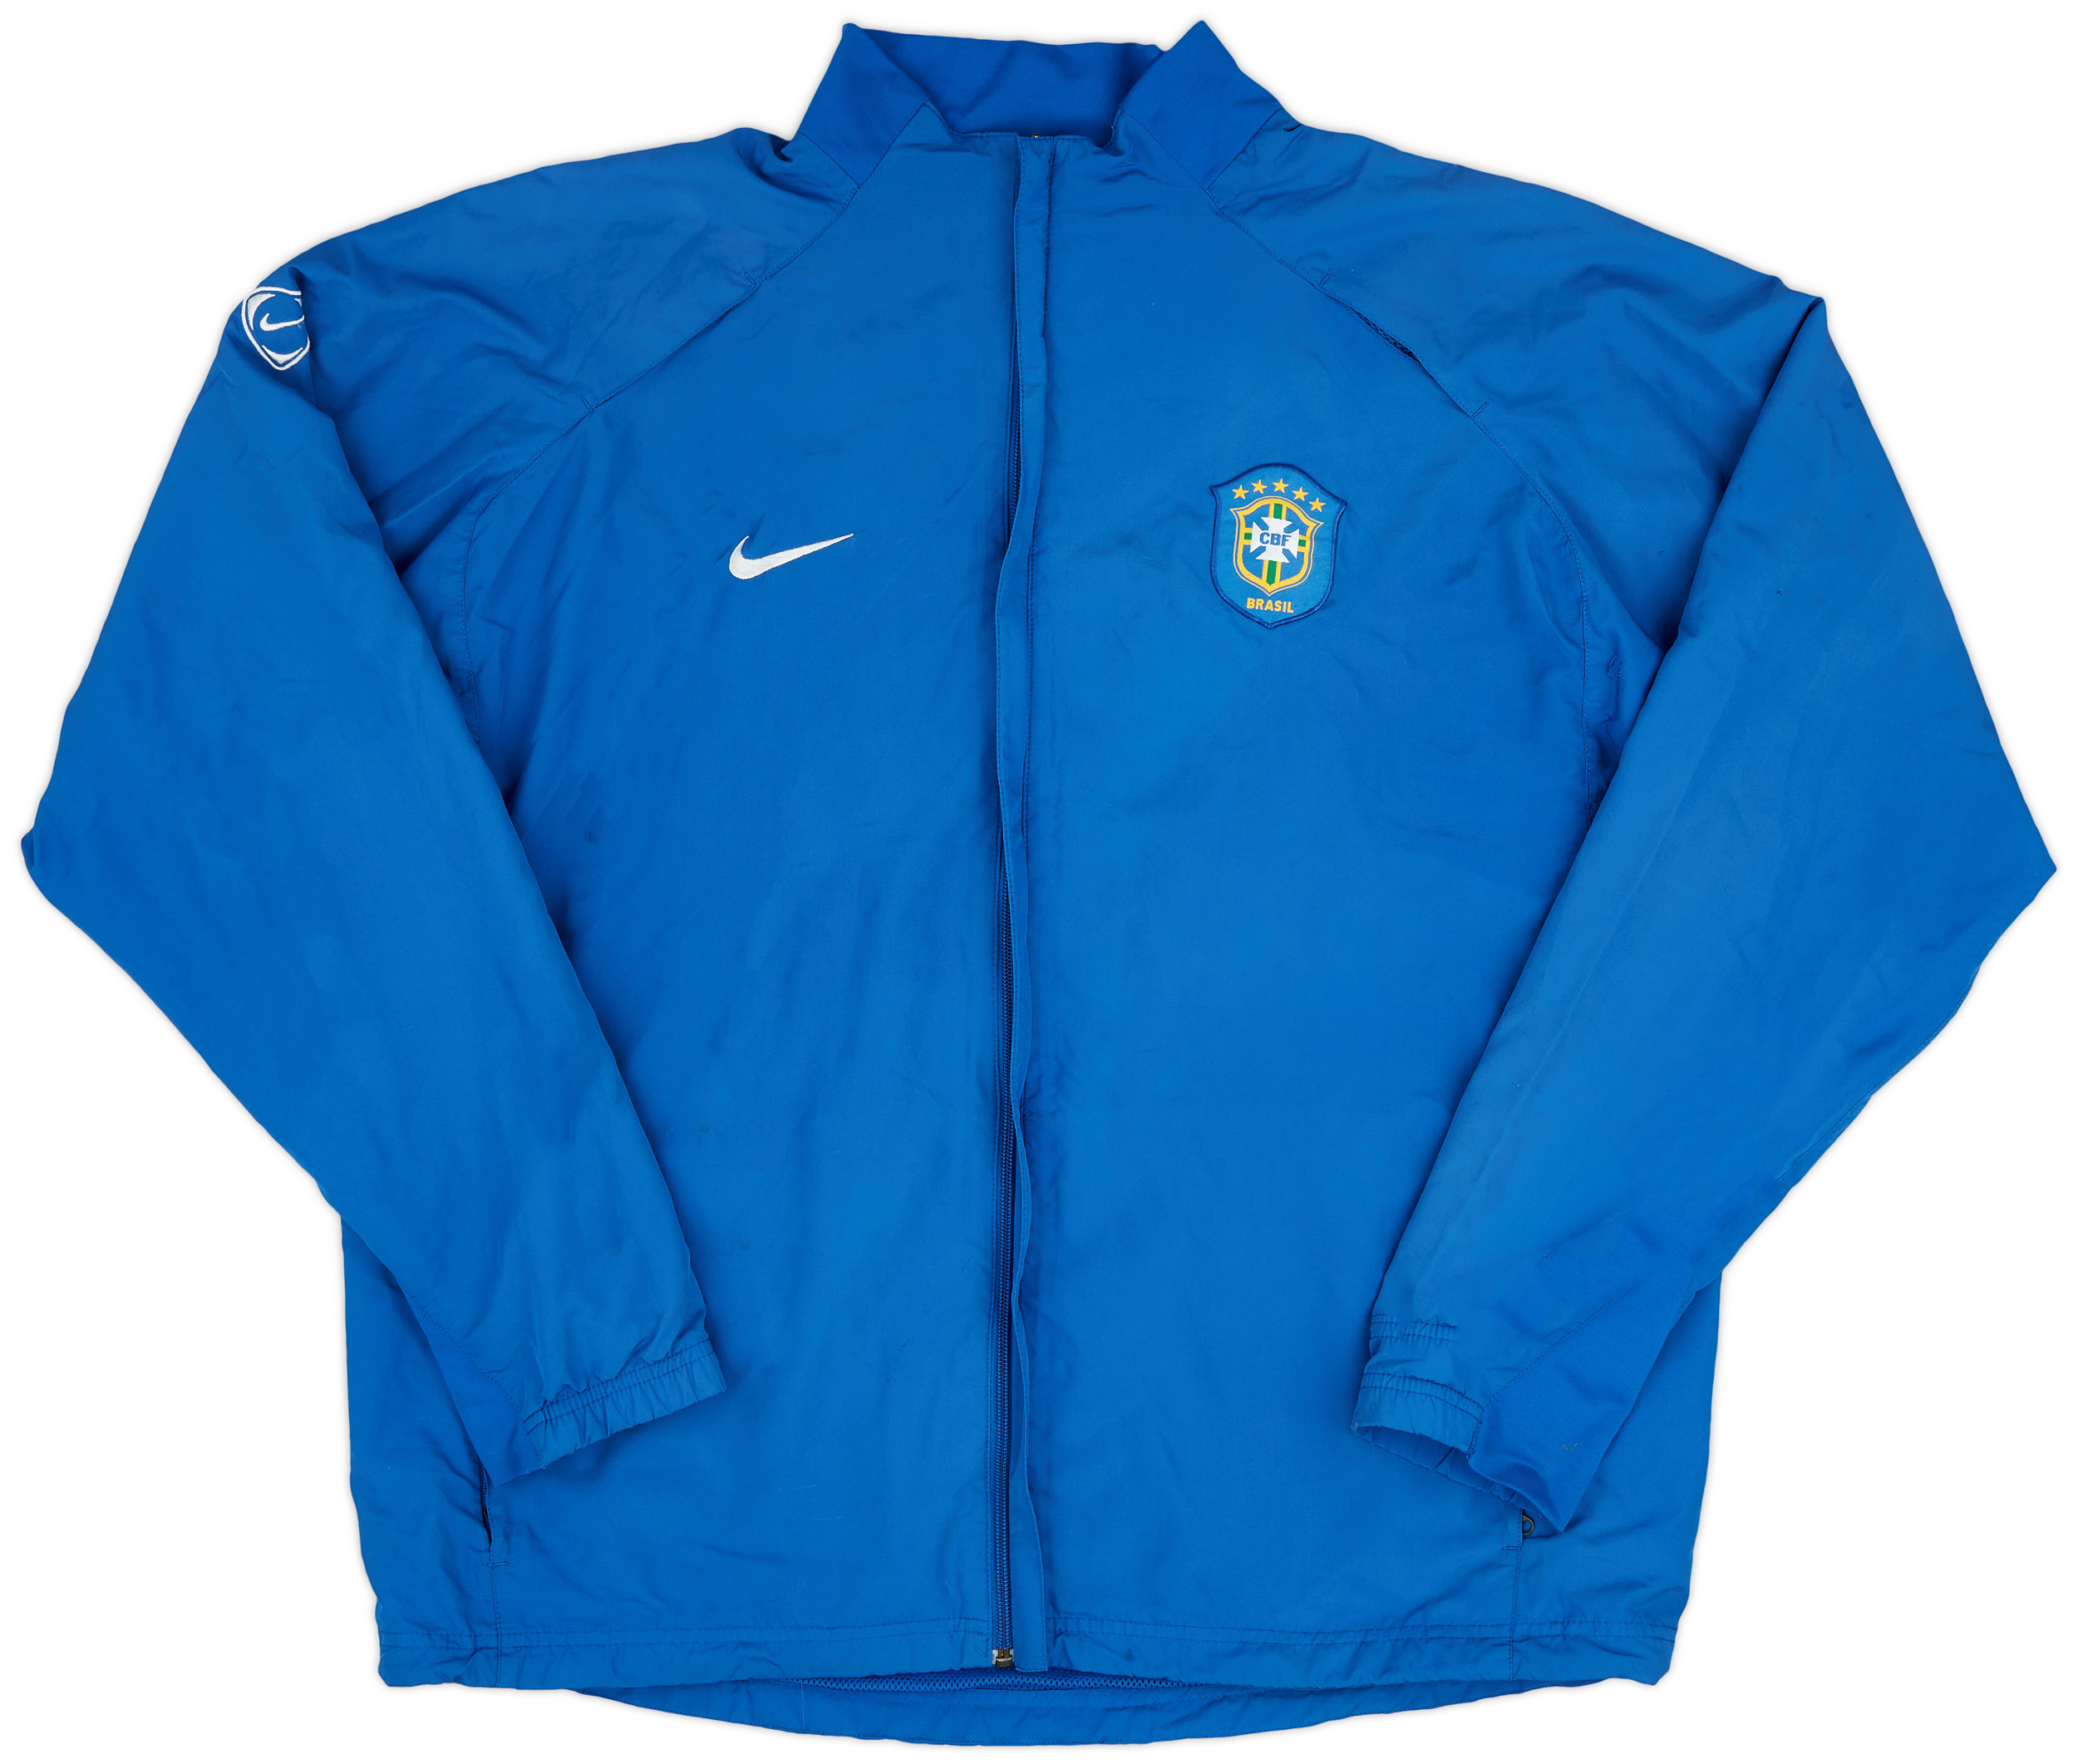 2006-08 Brazil Nike Track Jacket - 9/10 - (XL)